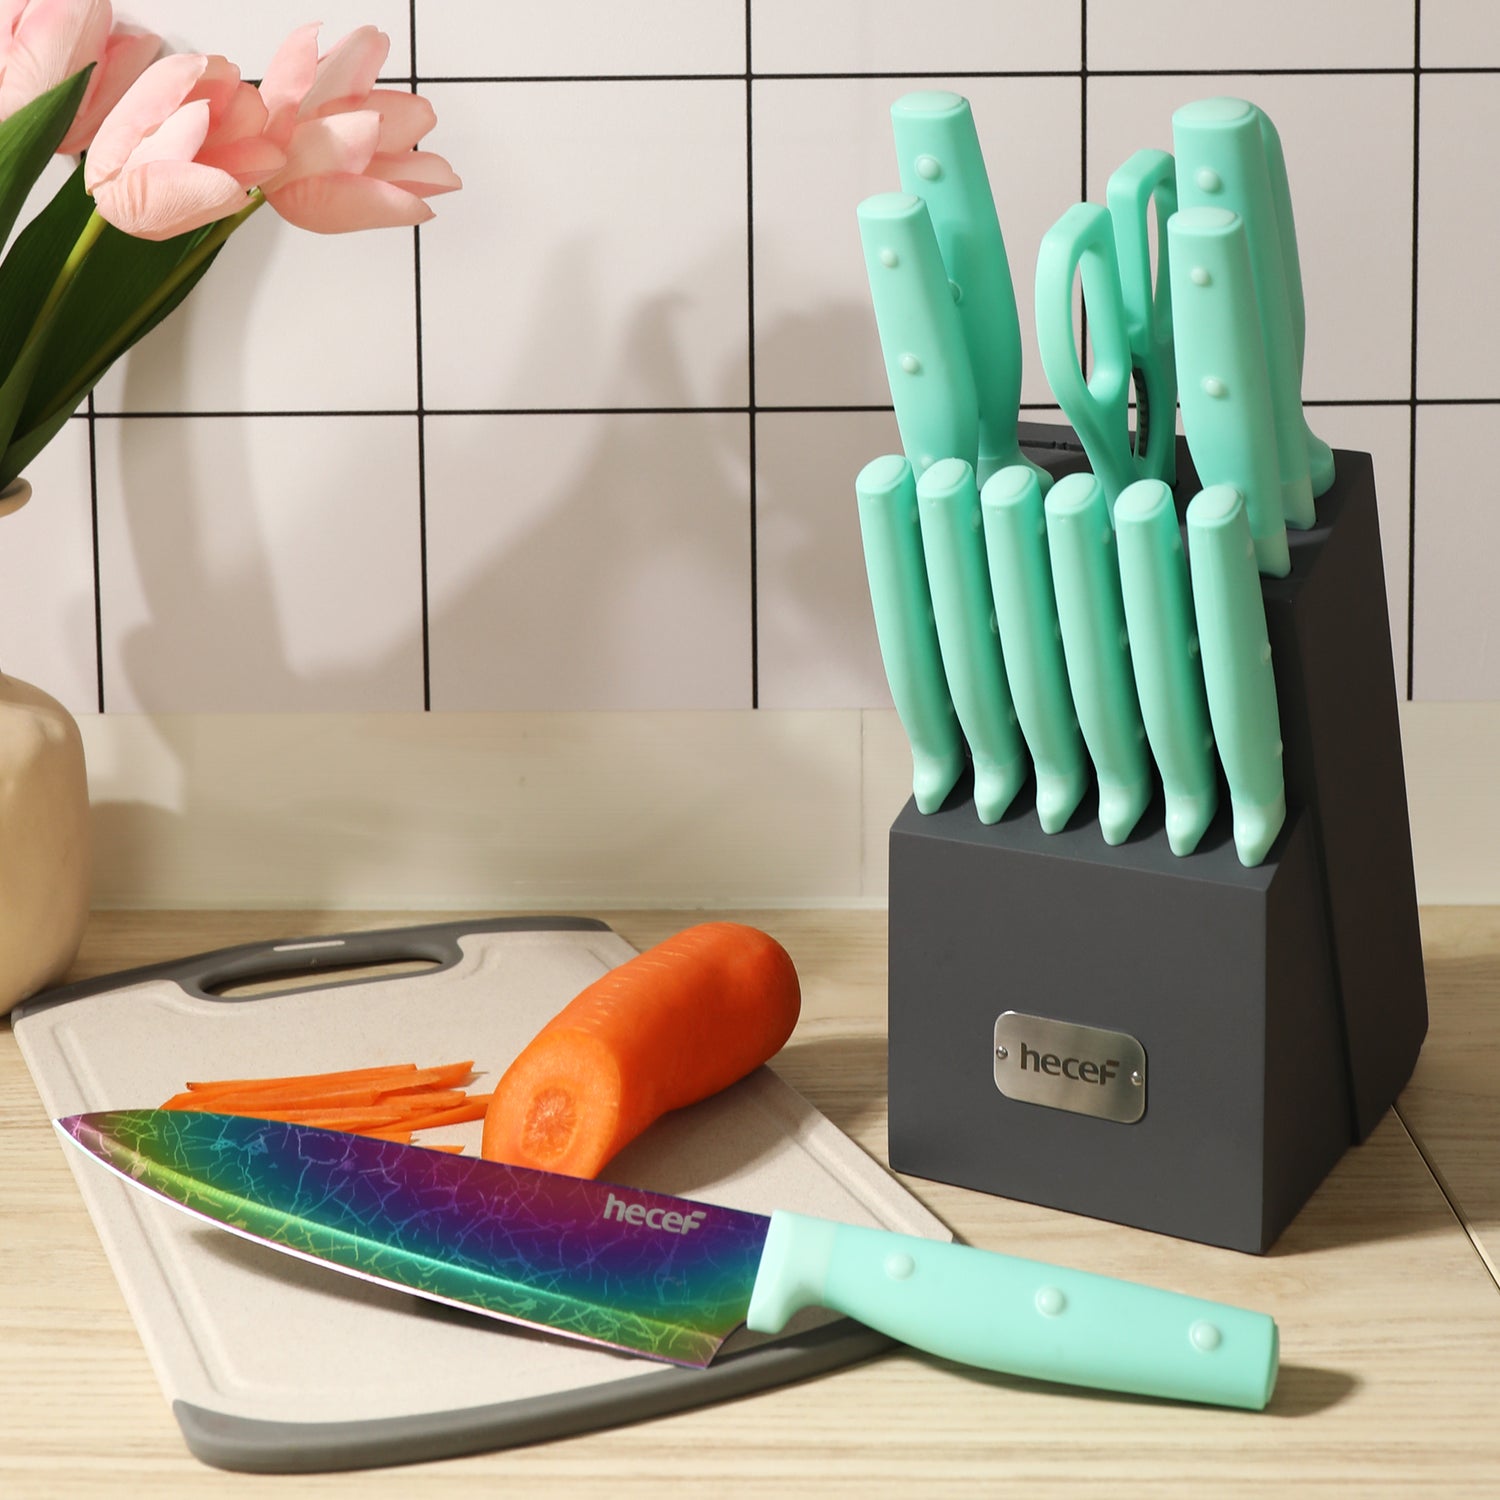 Dishwasher Safe Kya25 Rainbow Titanium Knife Block Set, Kitchen Knives Set with Block, Kitchen Scissor, Cutlery Block Knife Sets